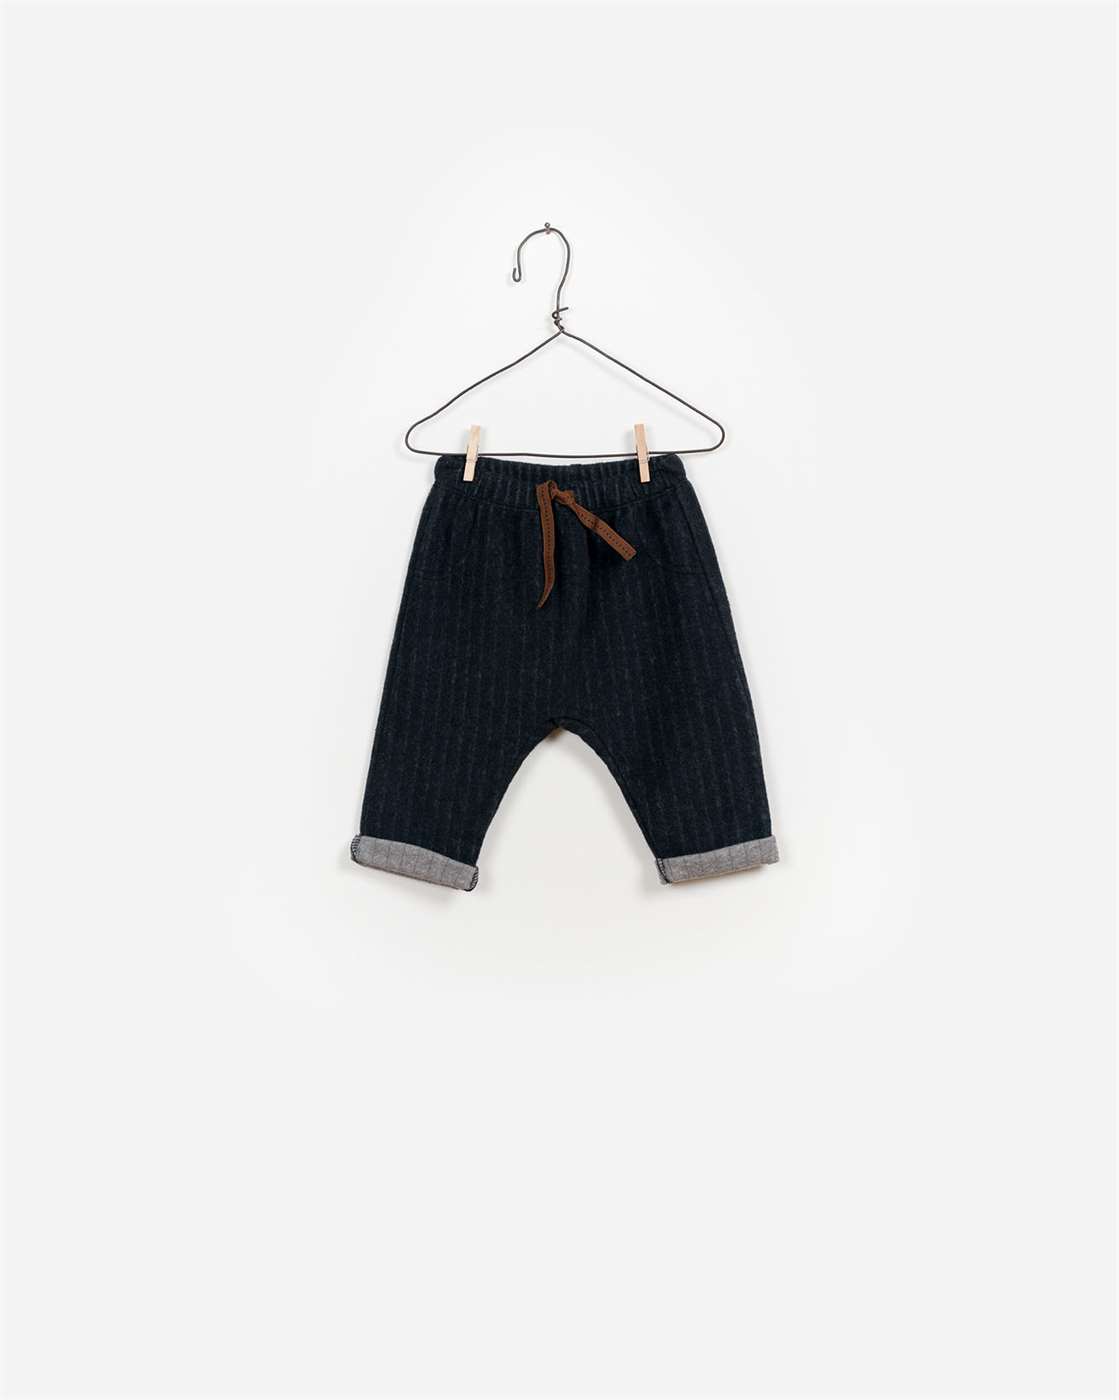 BeeBoo|BeeBoo PlayUp vêtements bébé baby clothes pantalon pants Felpa coton bio organic cotton noir black